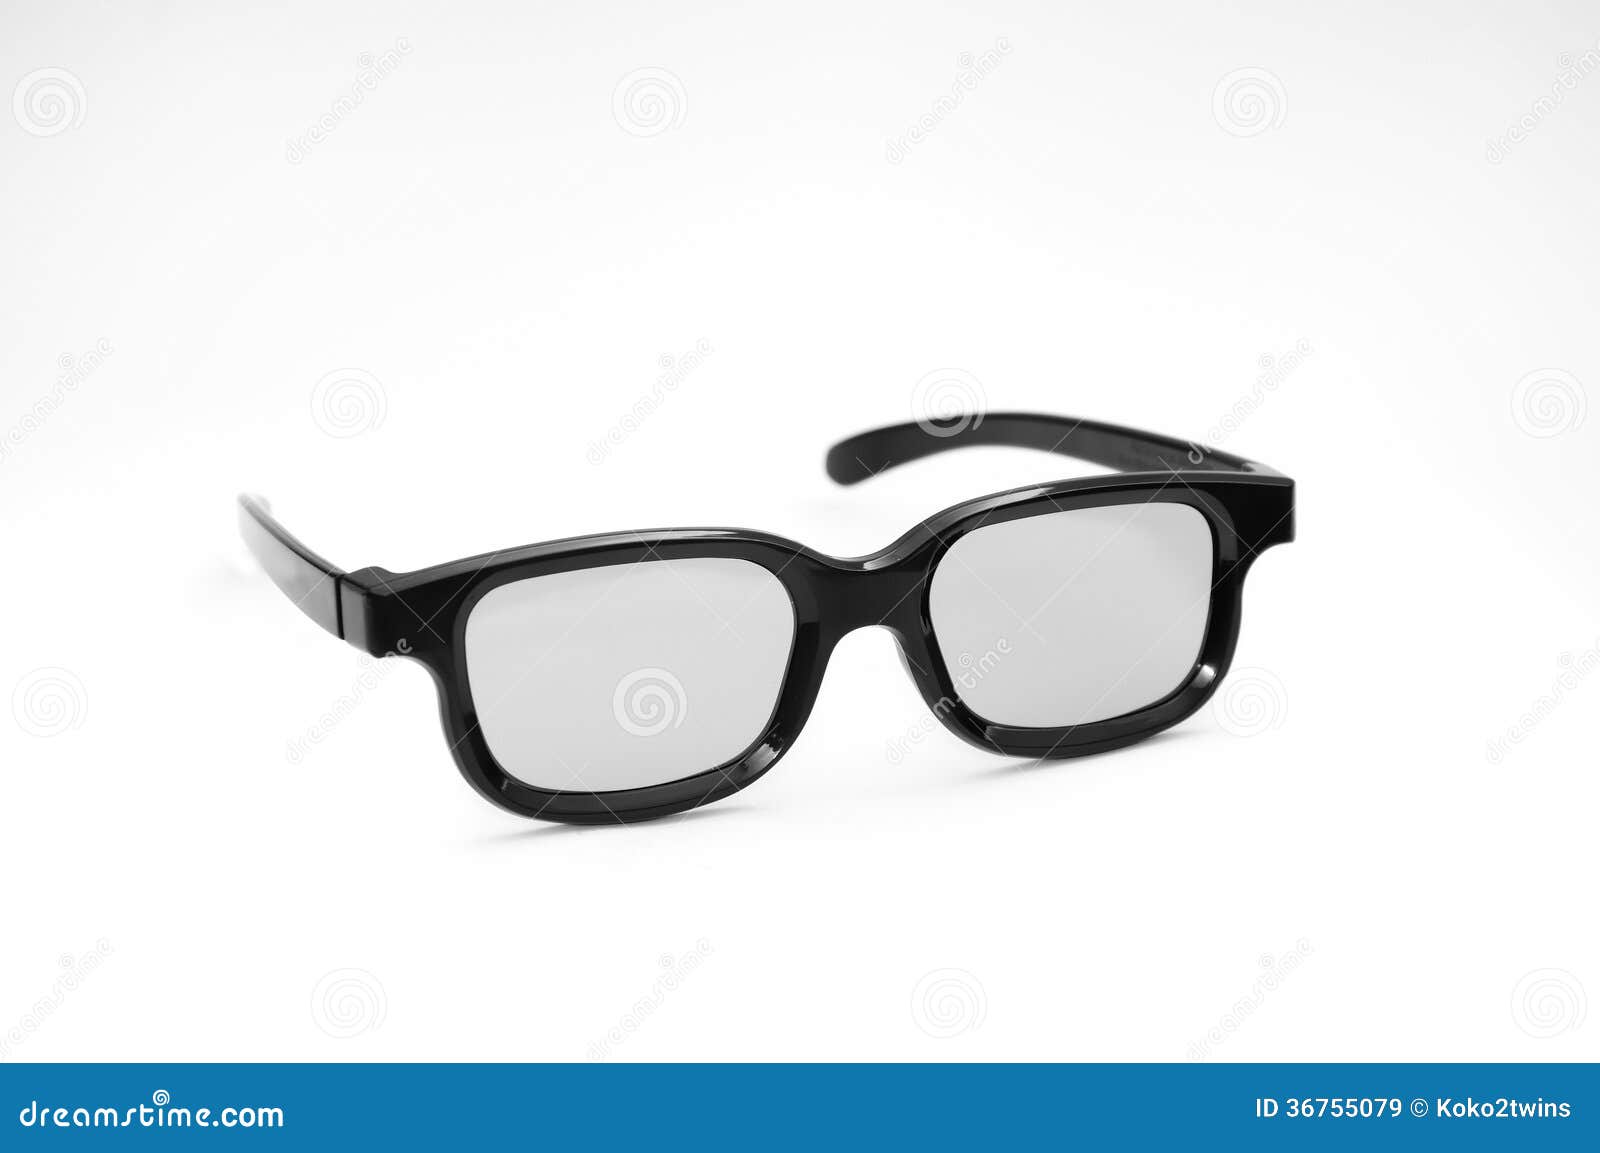 Home cinema 3D glasses stock image. Image of movie, three - 36755079